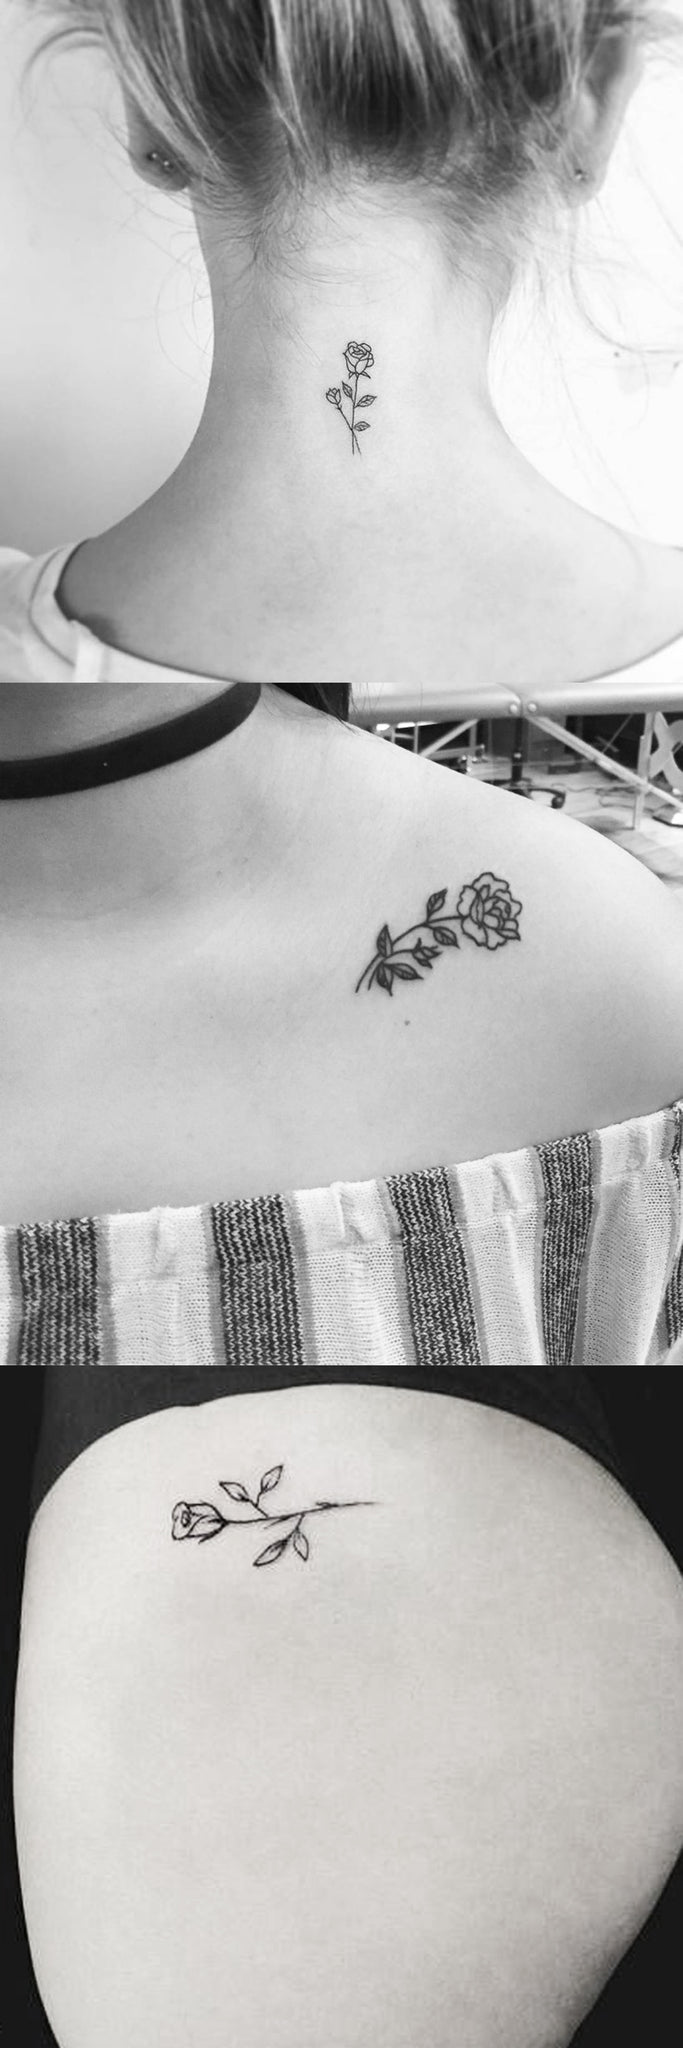 Cute & Small Floral Flower Tattoo Ideas for Women - Simple Rose Back of Neck Shoulder Butt Tatt - MyBodiArt.com